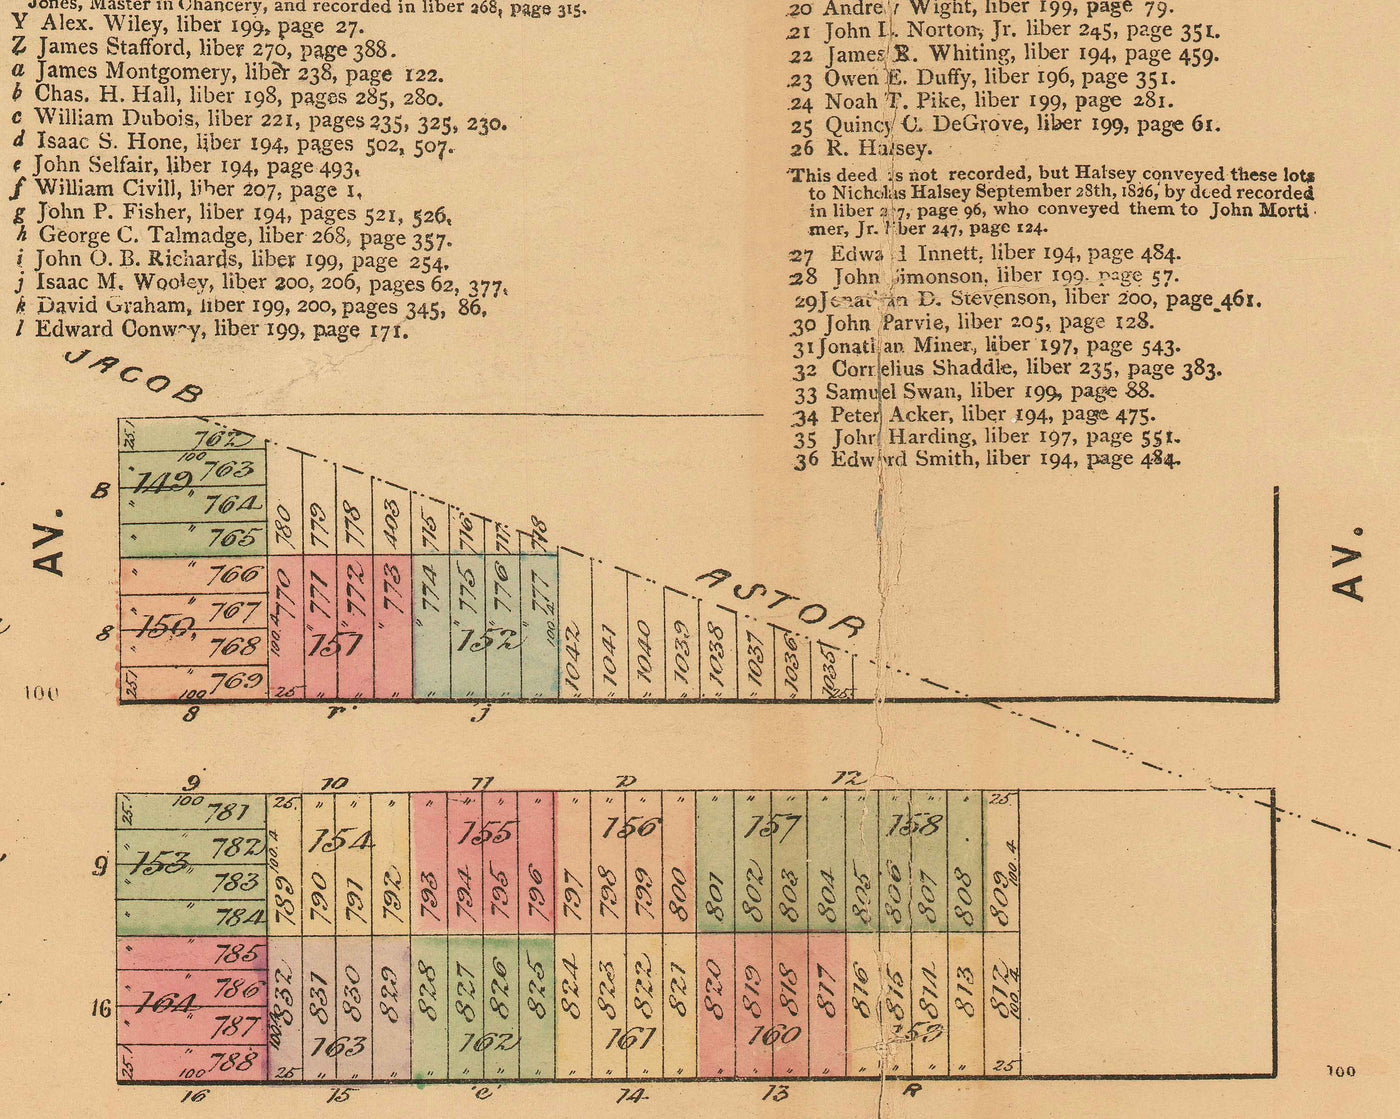 Mapa antiguo de Hell's Kitchen y Midtown West, NYC 1872 - Calles Clinton, Manhattan, Heritage Farm, calles 39 a 48